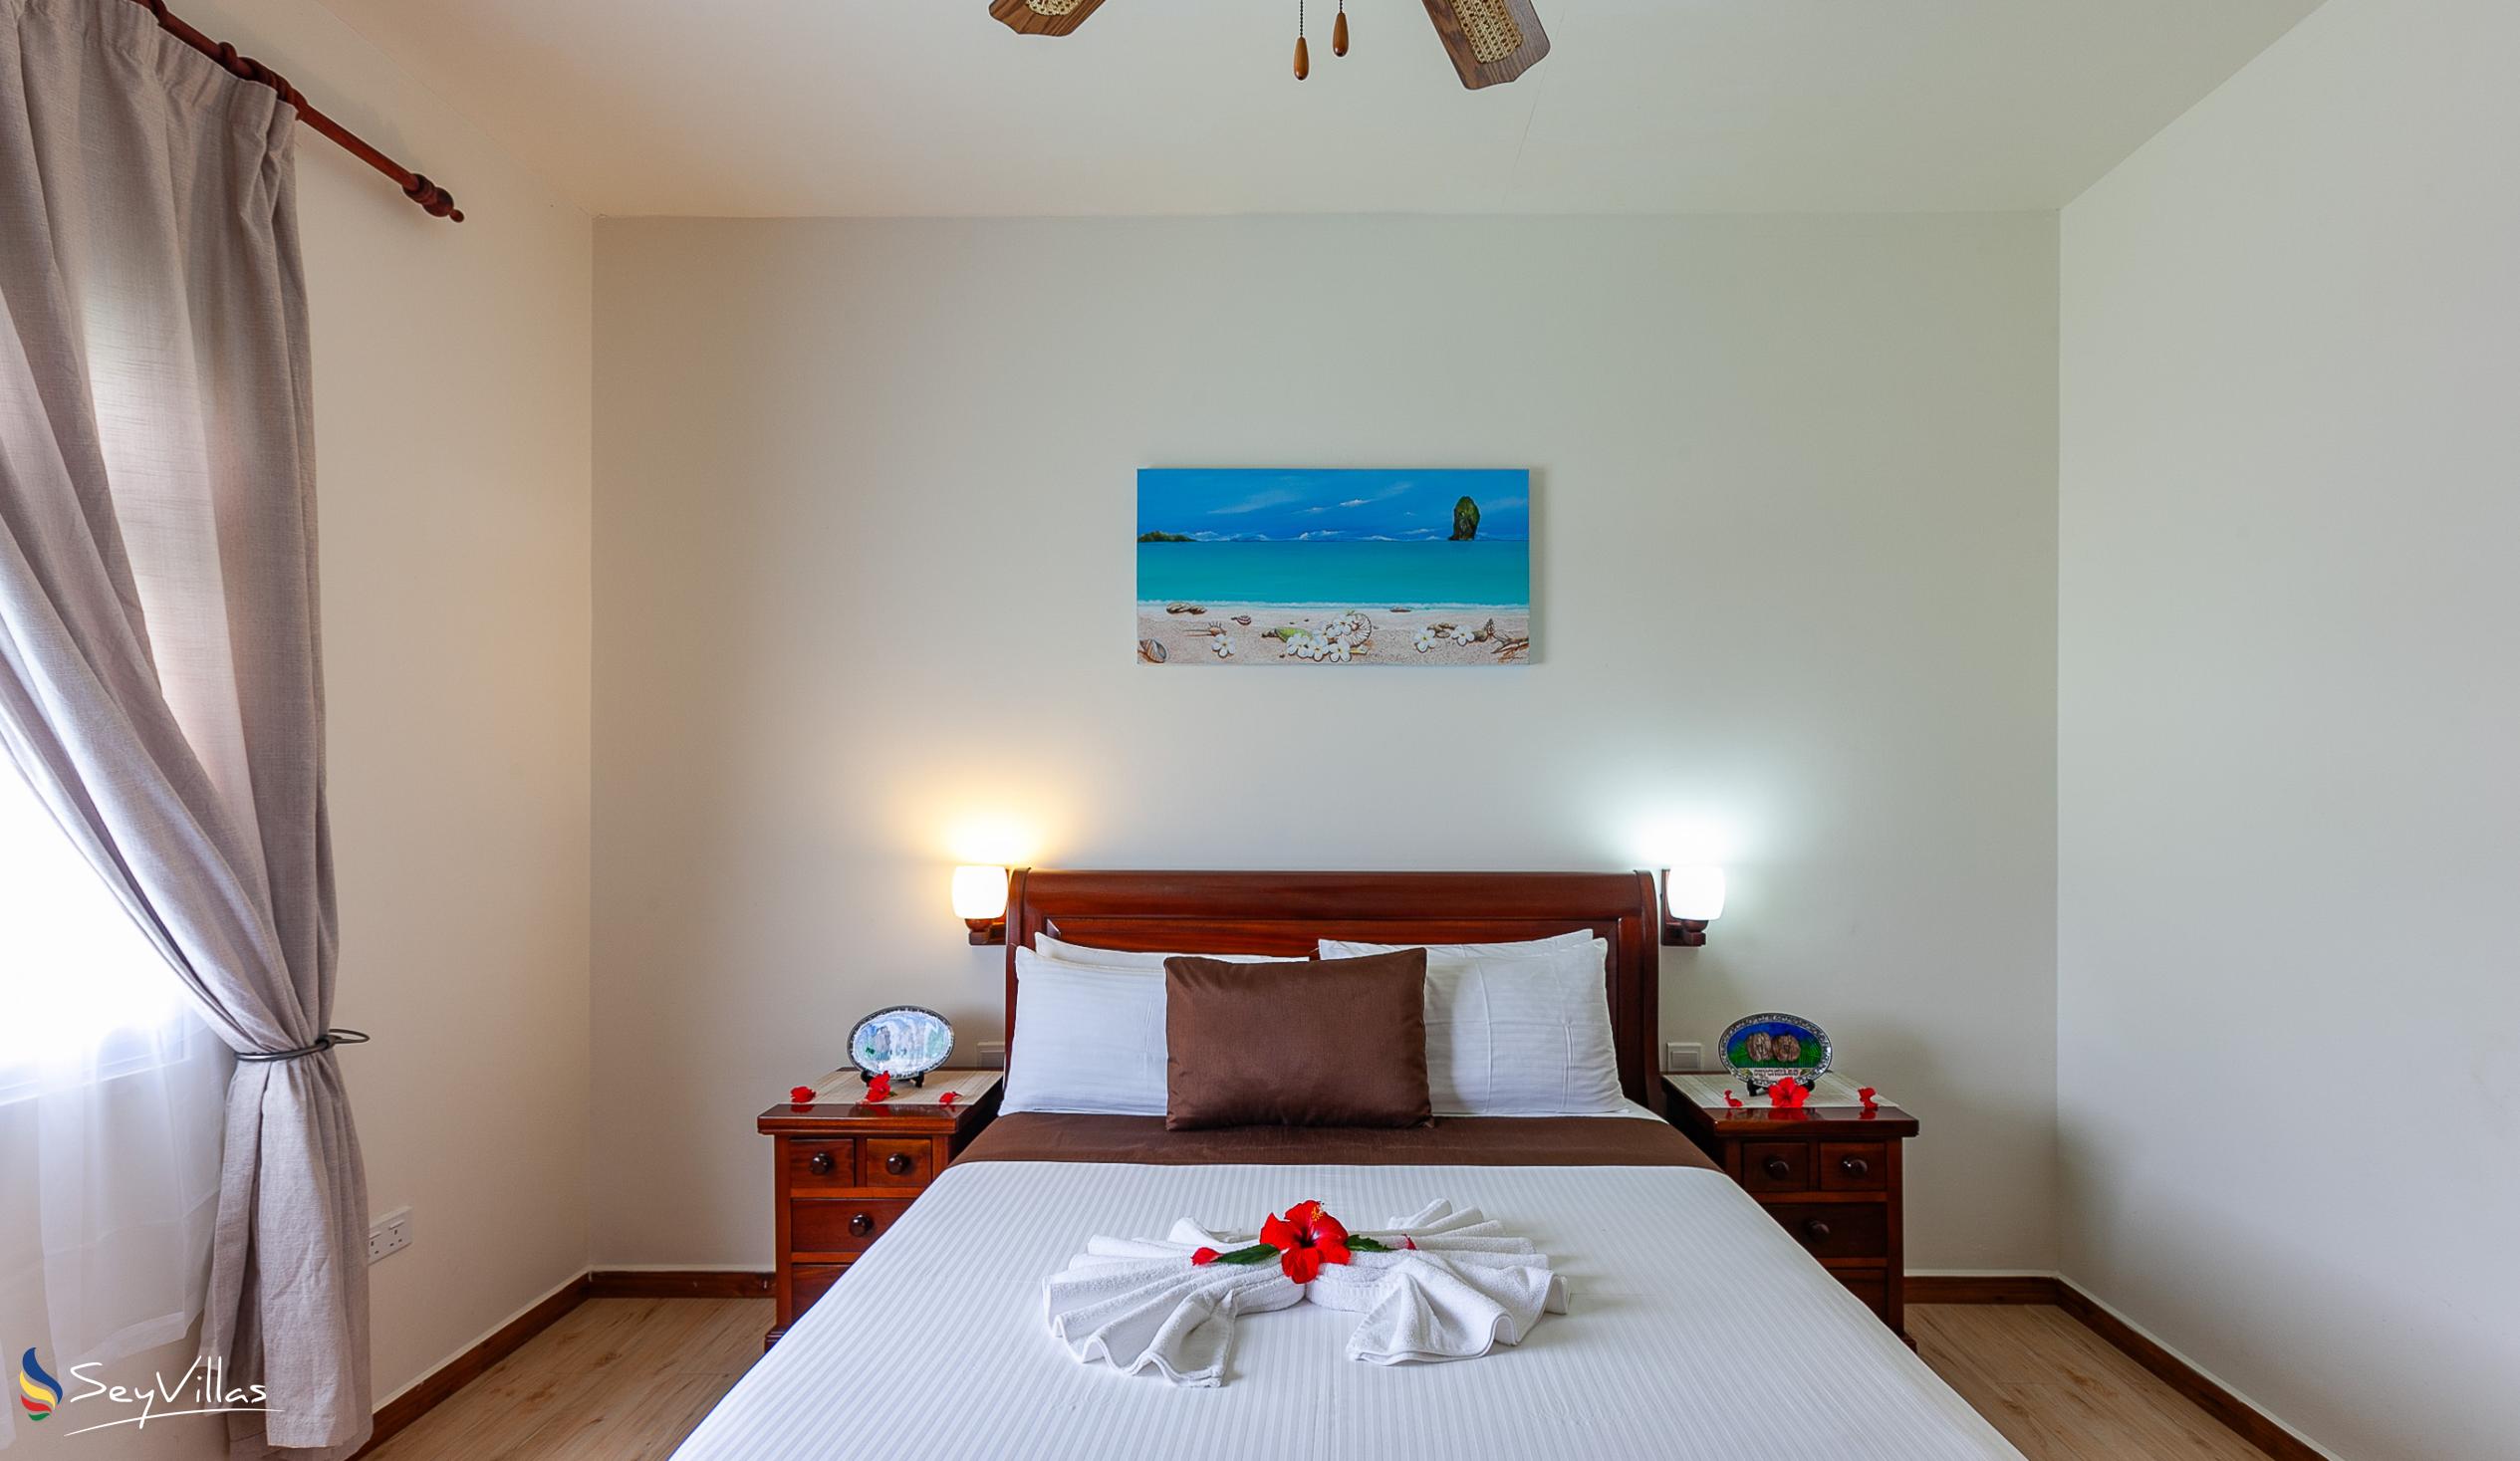 Photo 72: Seashell Beach Villa - 2-Bedroom Apartment - Praslin (Seychelles)